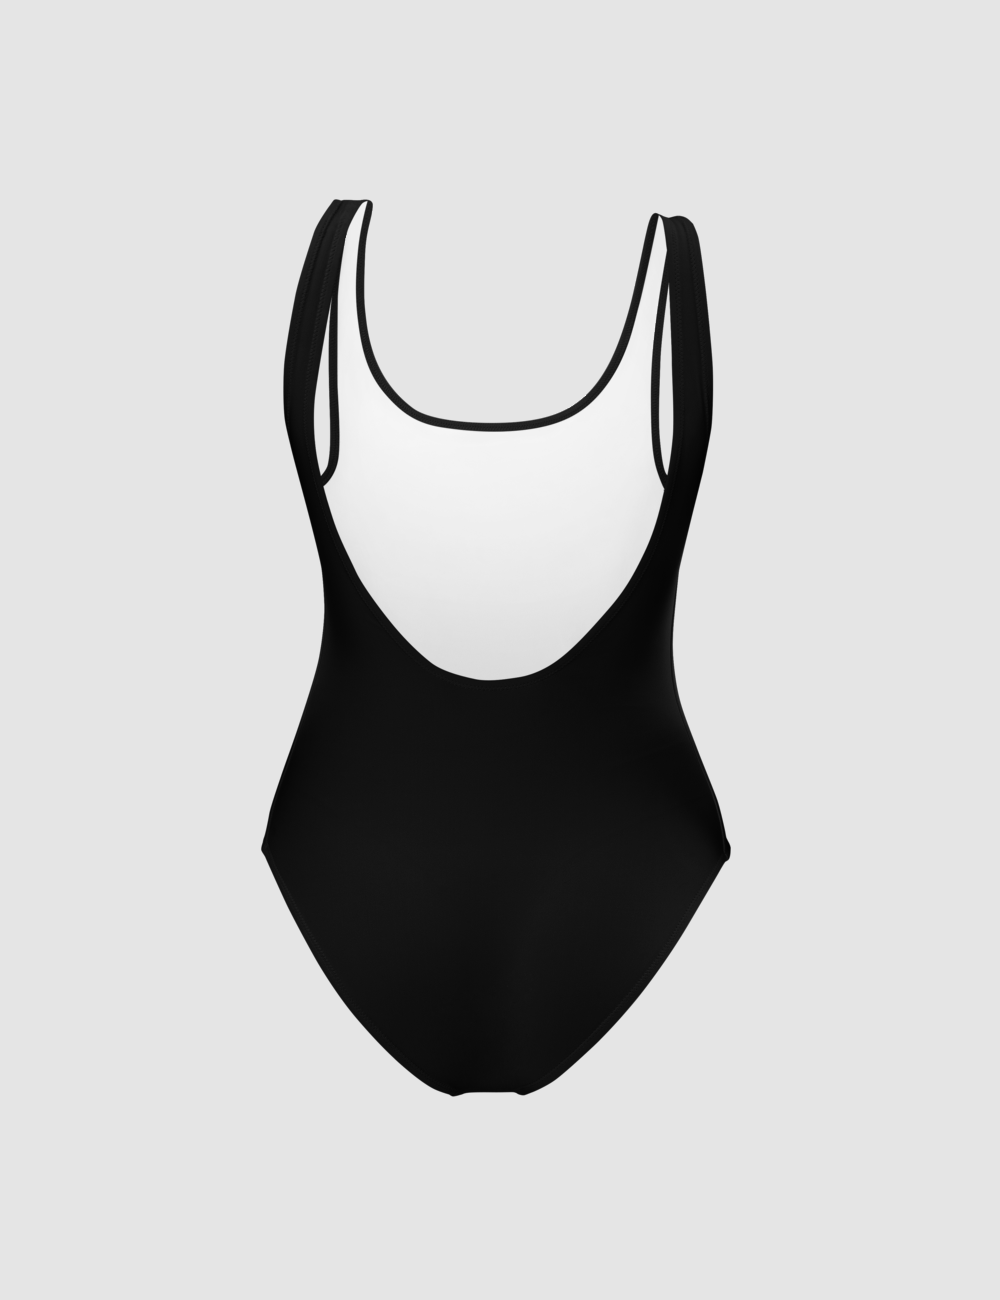 Melanin Poppin | Women's One-Piece Swimsuit OniTakai